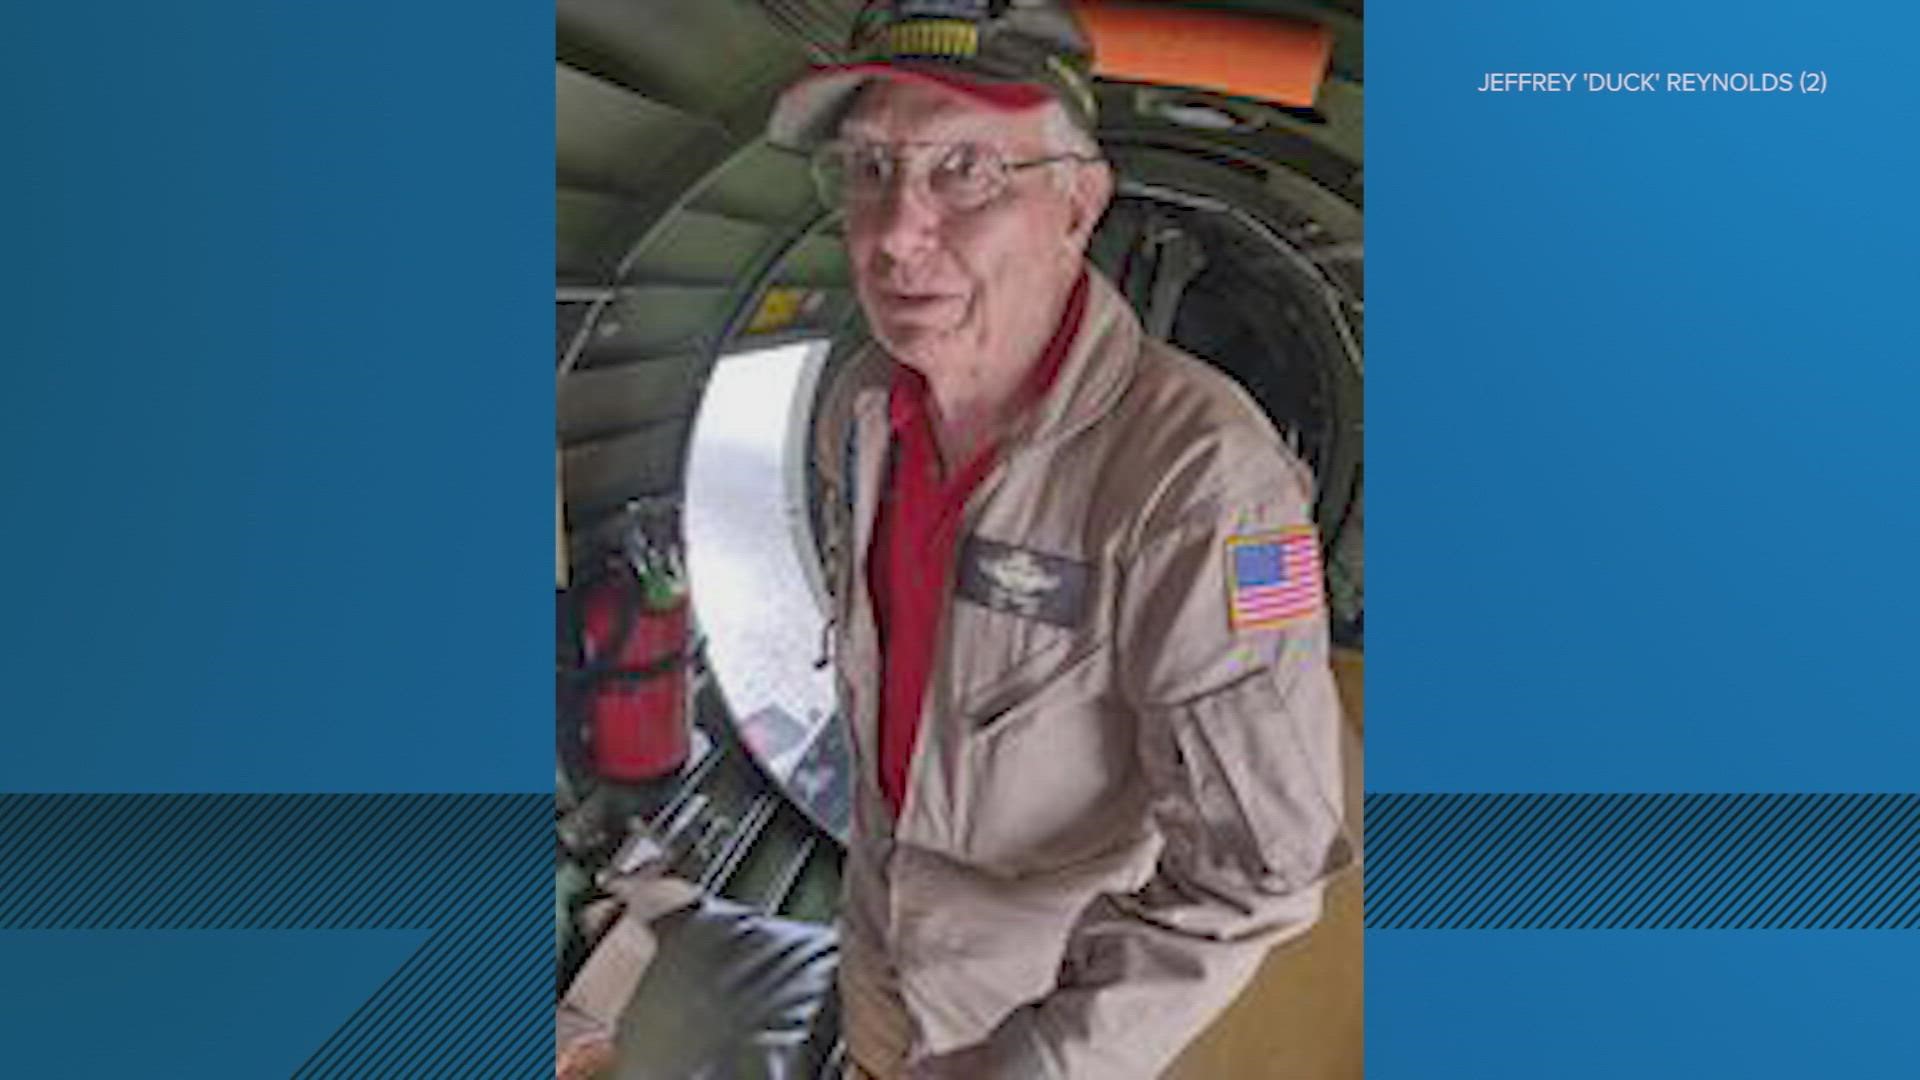 Arleigh Hertzler met Dan Ragan aboard the B-17 Flying Fortress earlier this year. “He just opened up, he's a very, very humble, very, very sweet man."